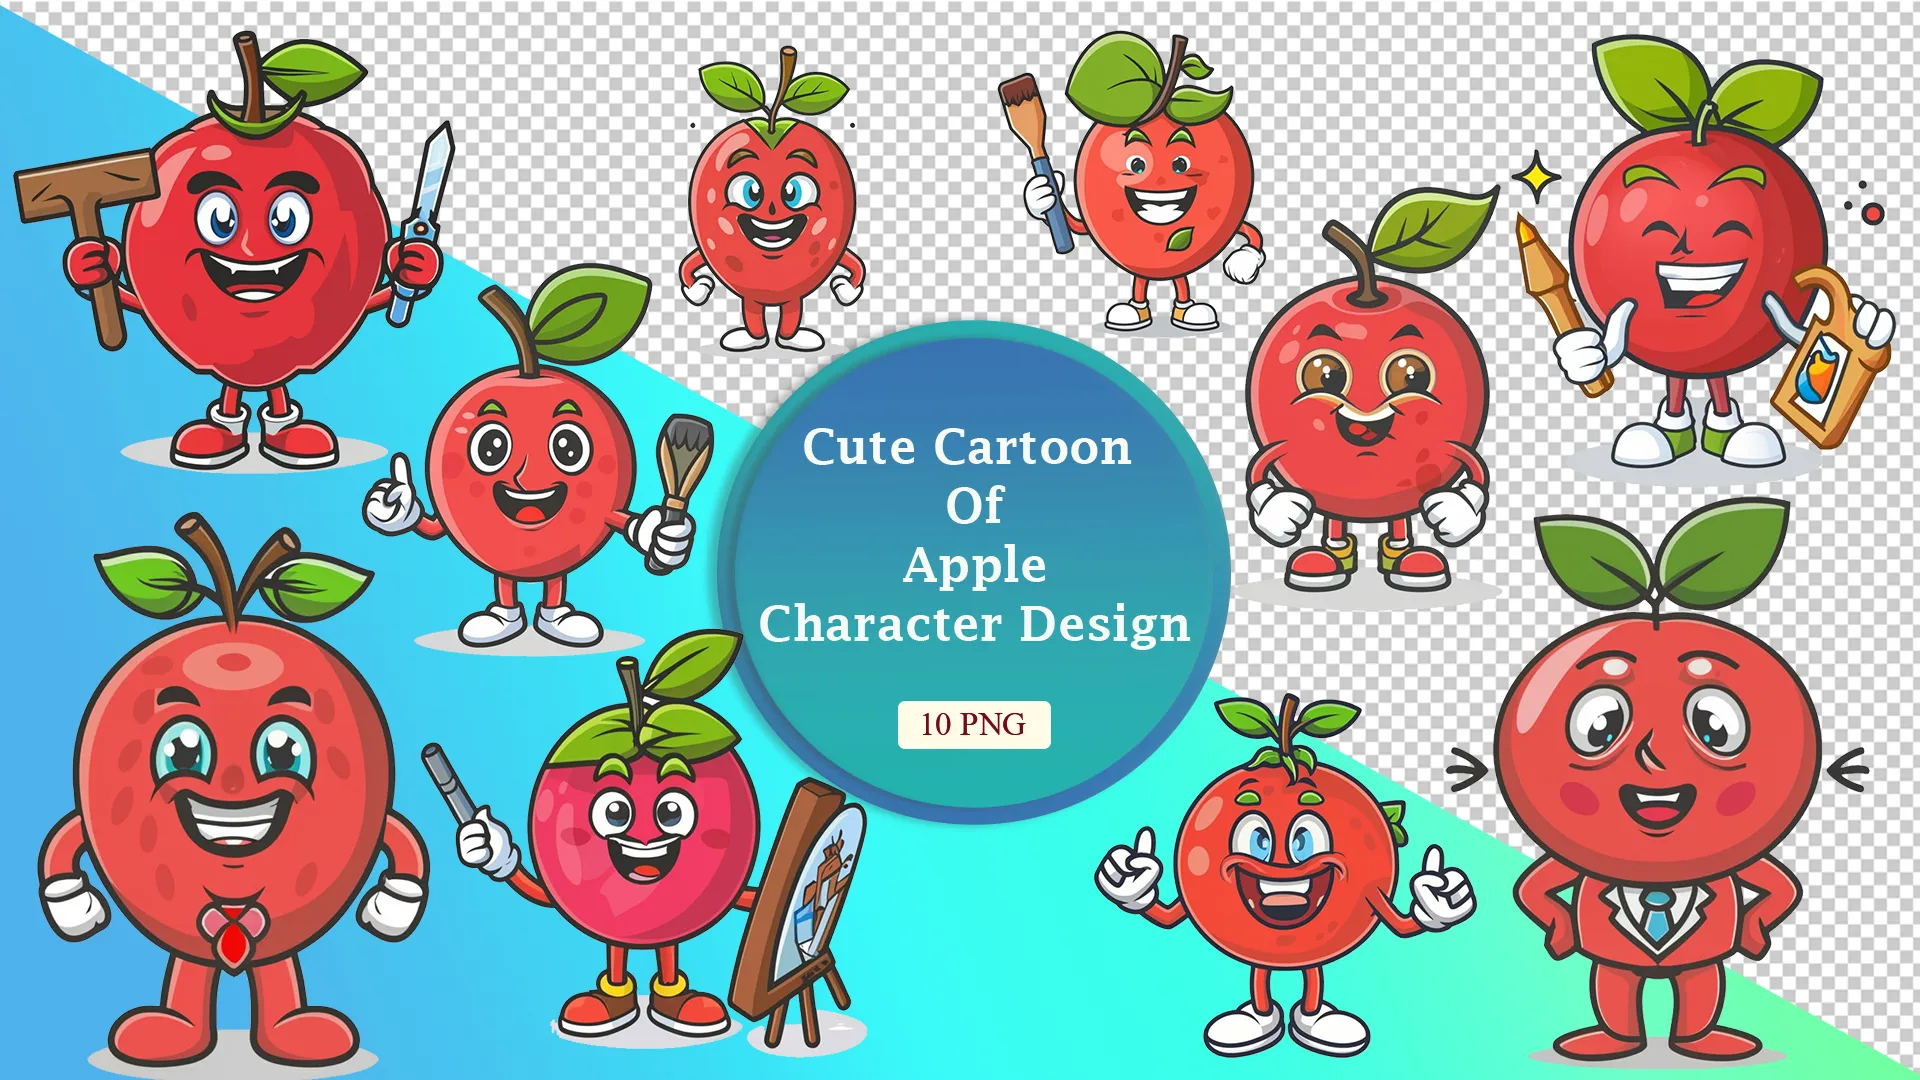 Creative Apple Cartoon PNG Pack